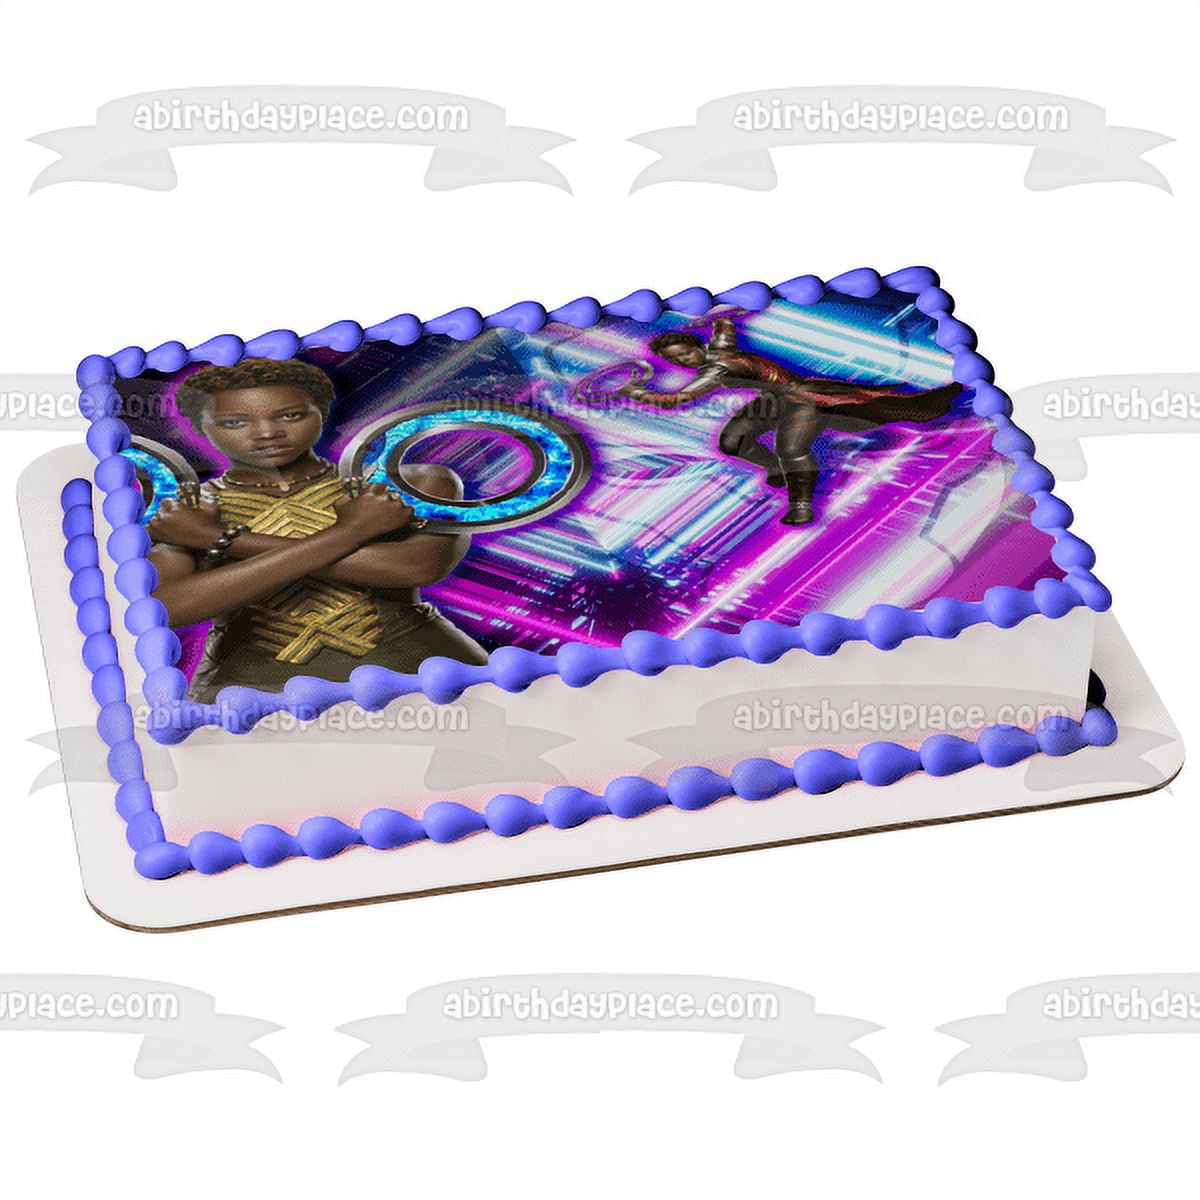 Black Panther Cake - Da Cakes Houston